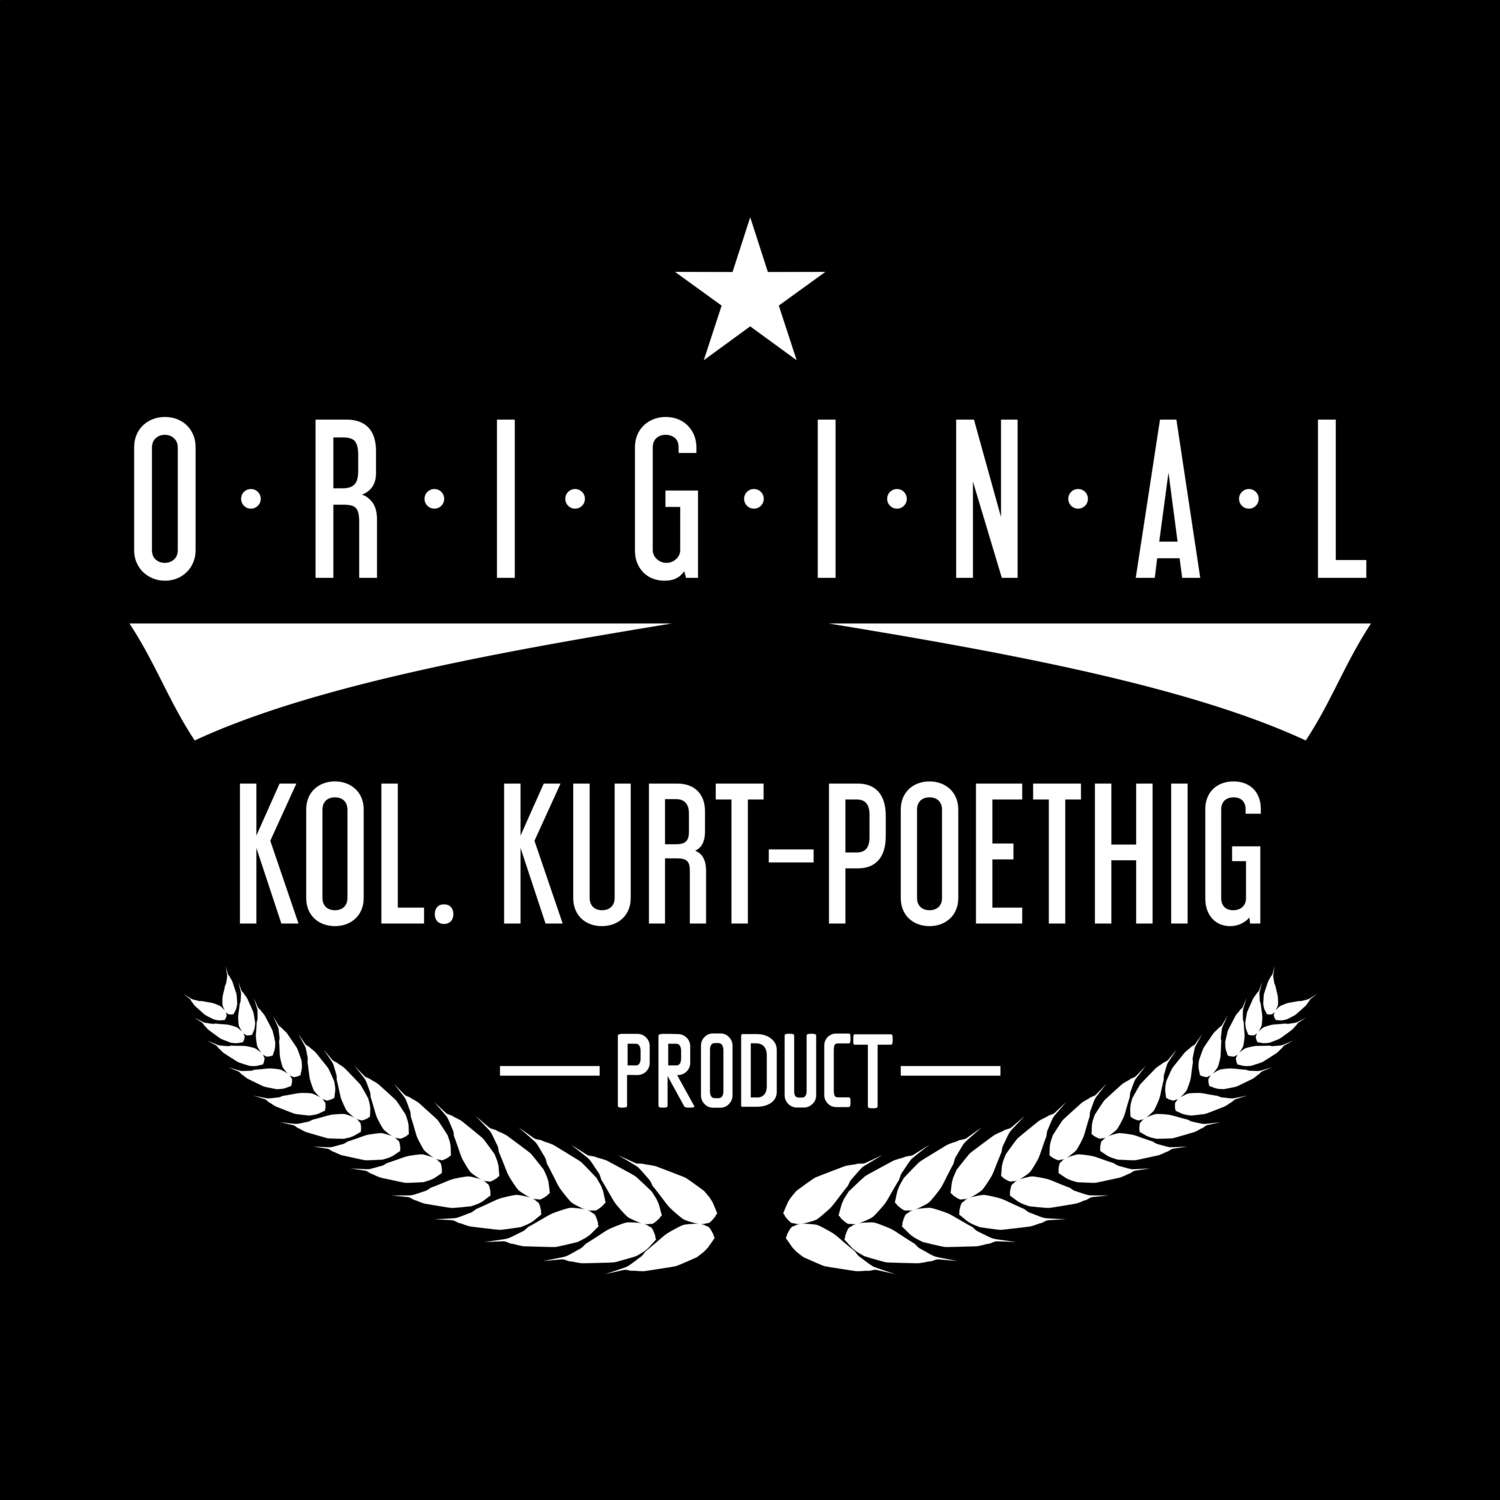 Kol. Kurt-Poethig T-Shirt »Original Product«